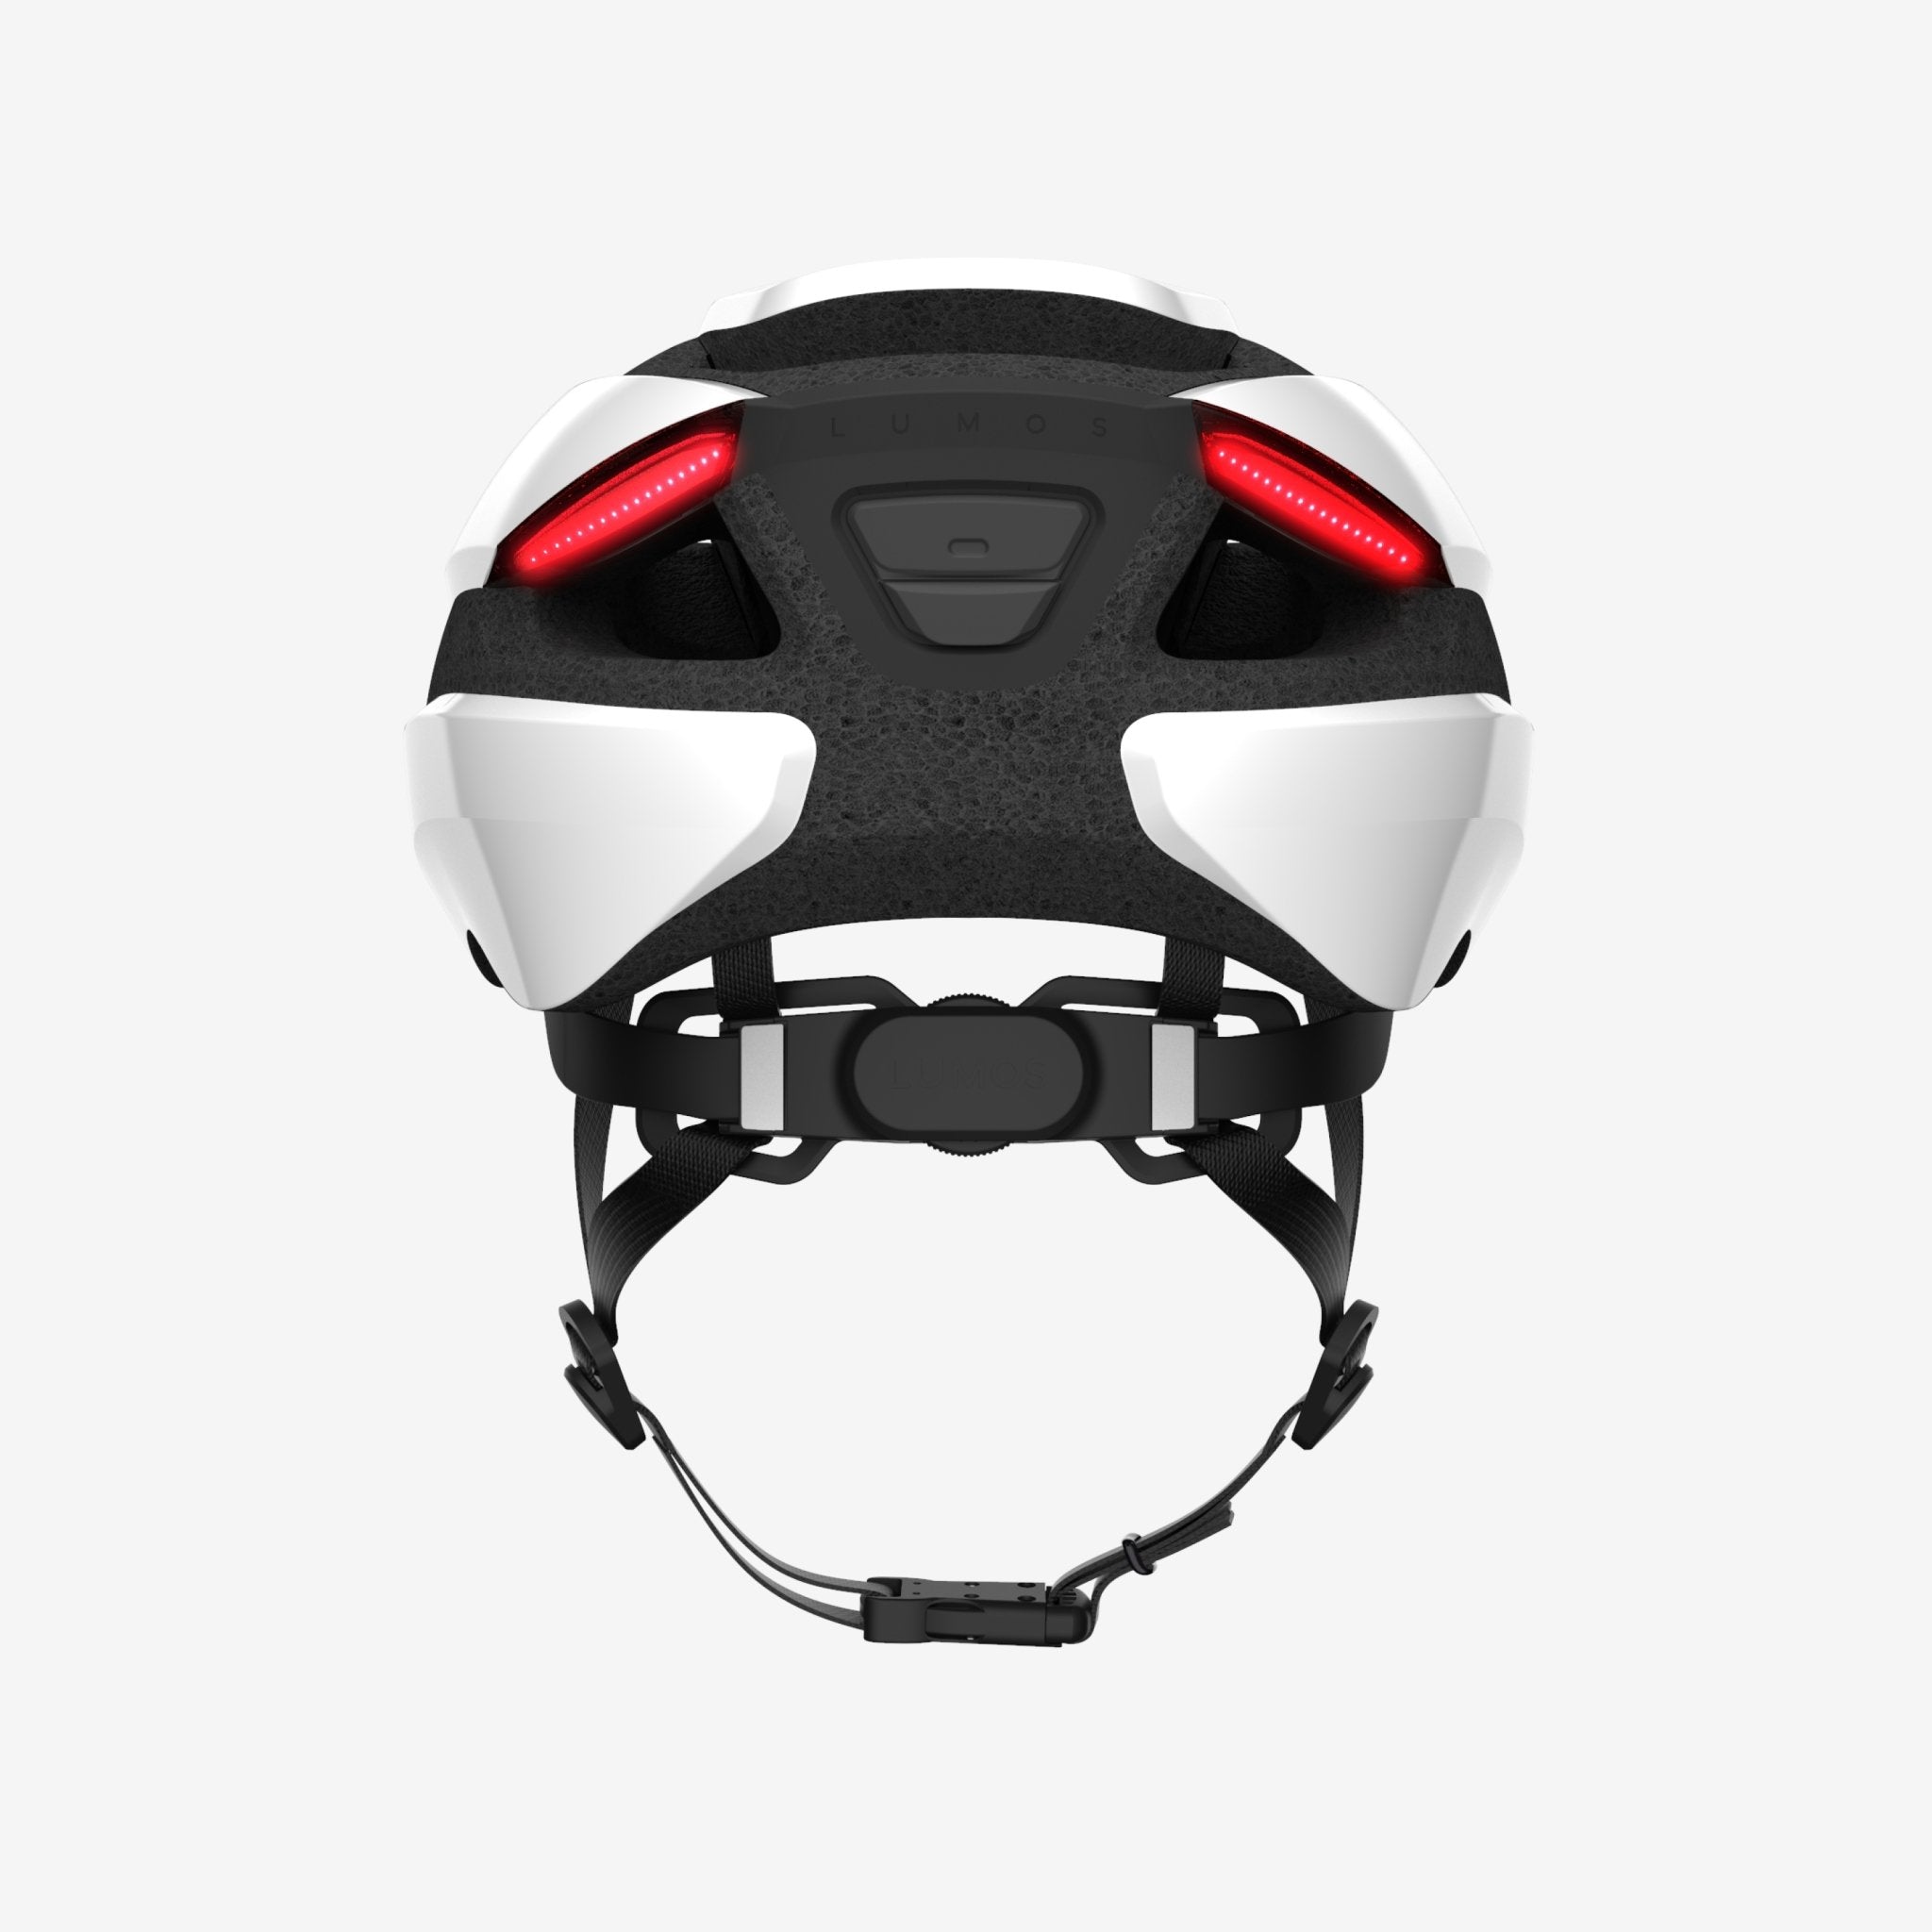 Lumos Ultra Smart Helmet White - LOCO Scooters